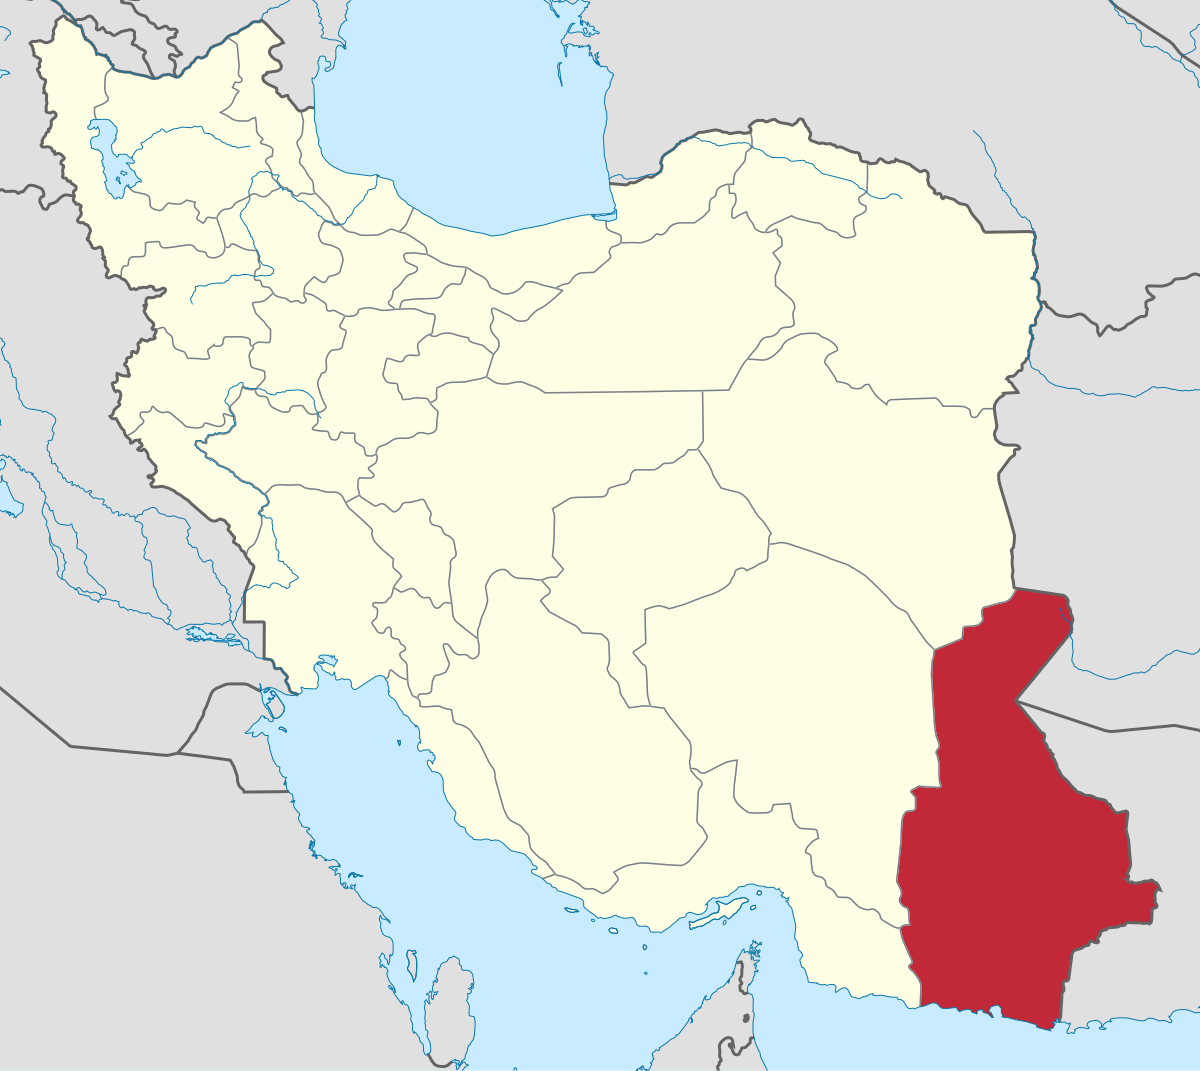 استان سیستان و بلوچستان